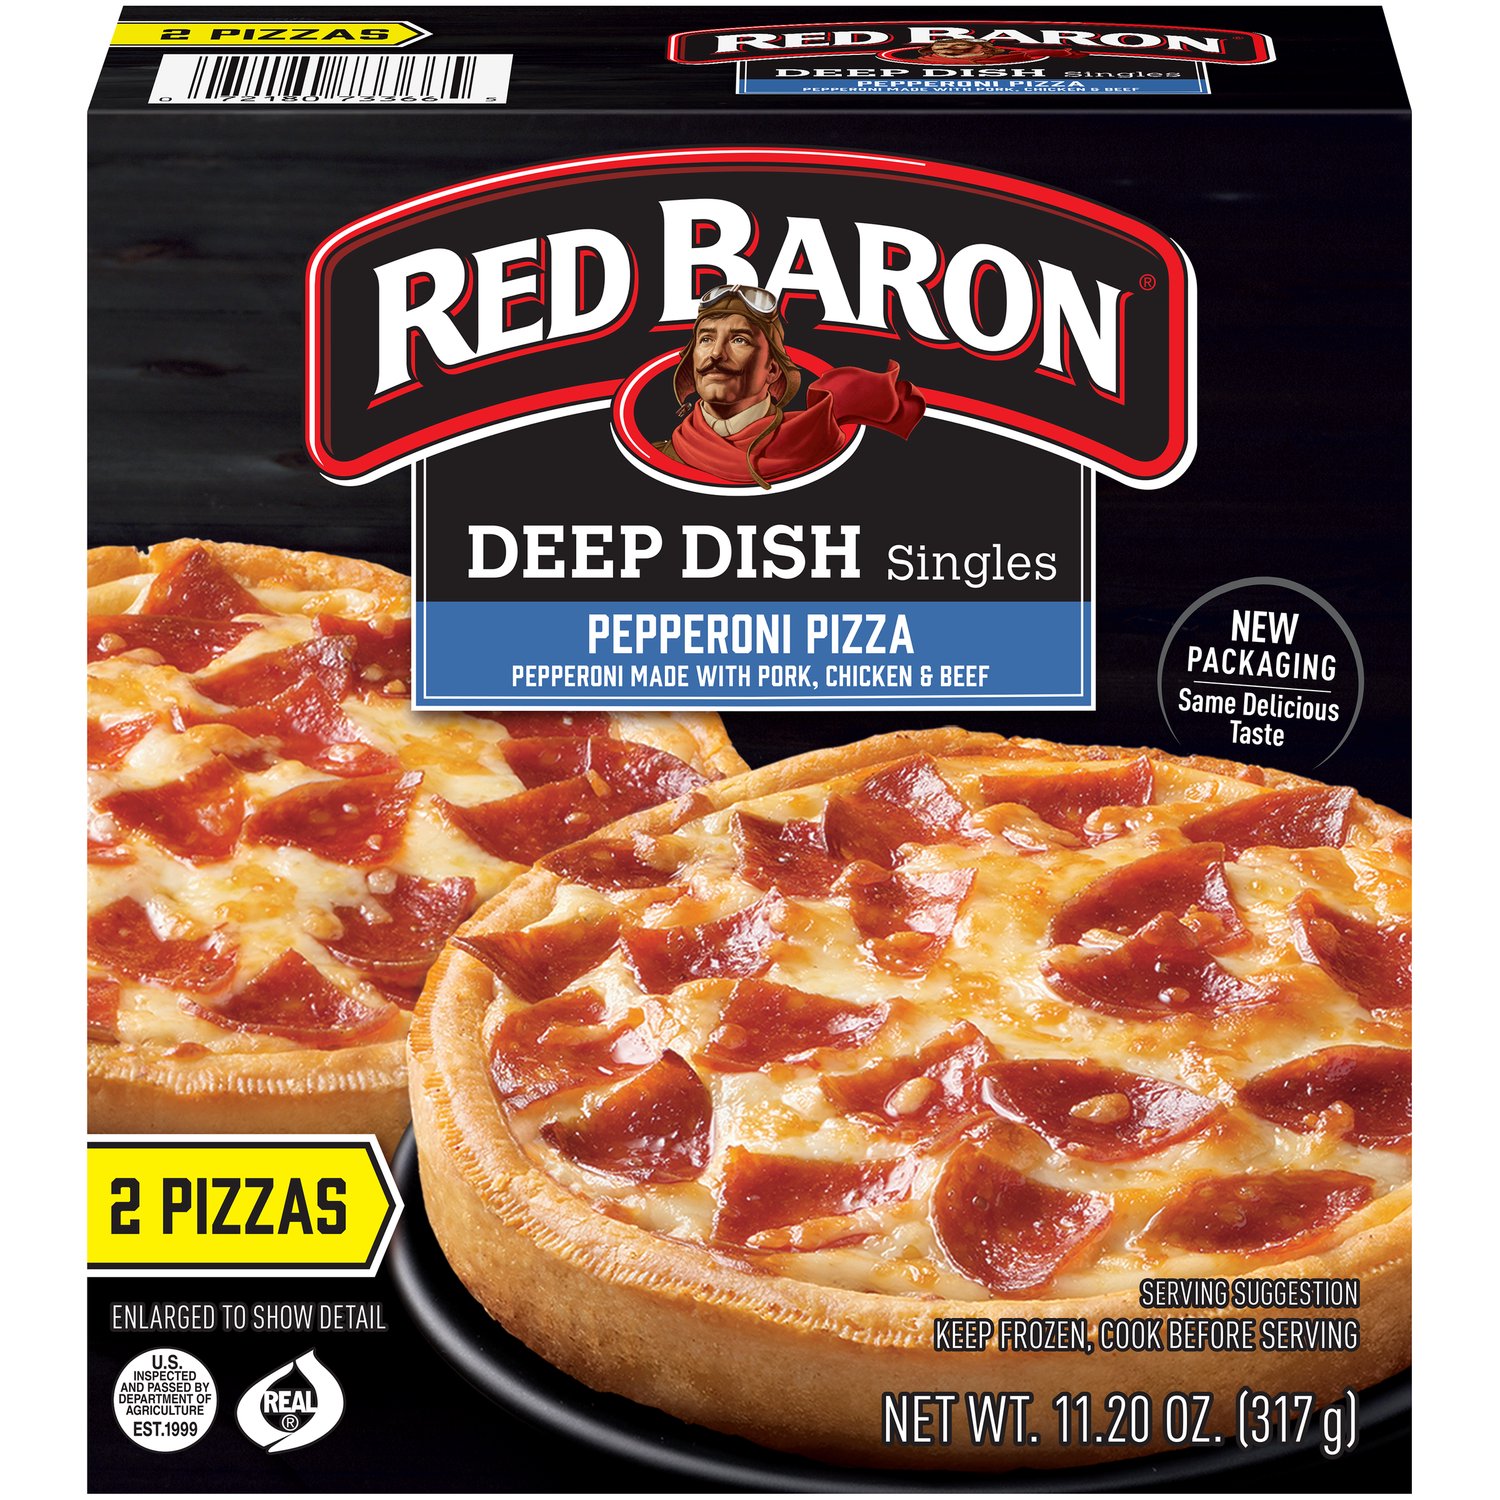 Spicy Pepperoni Pan Pizza: King Arthur Adaptation • deepfriedhoney